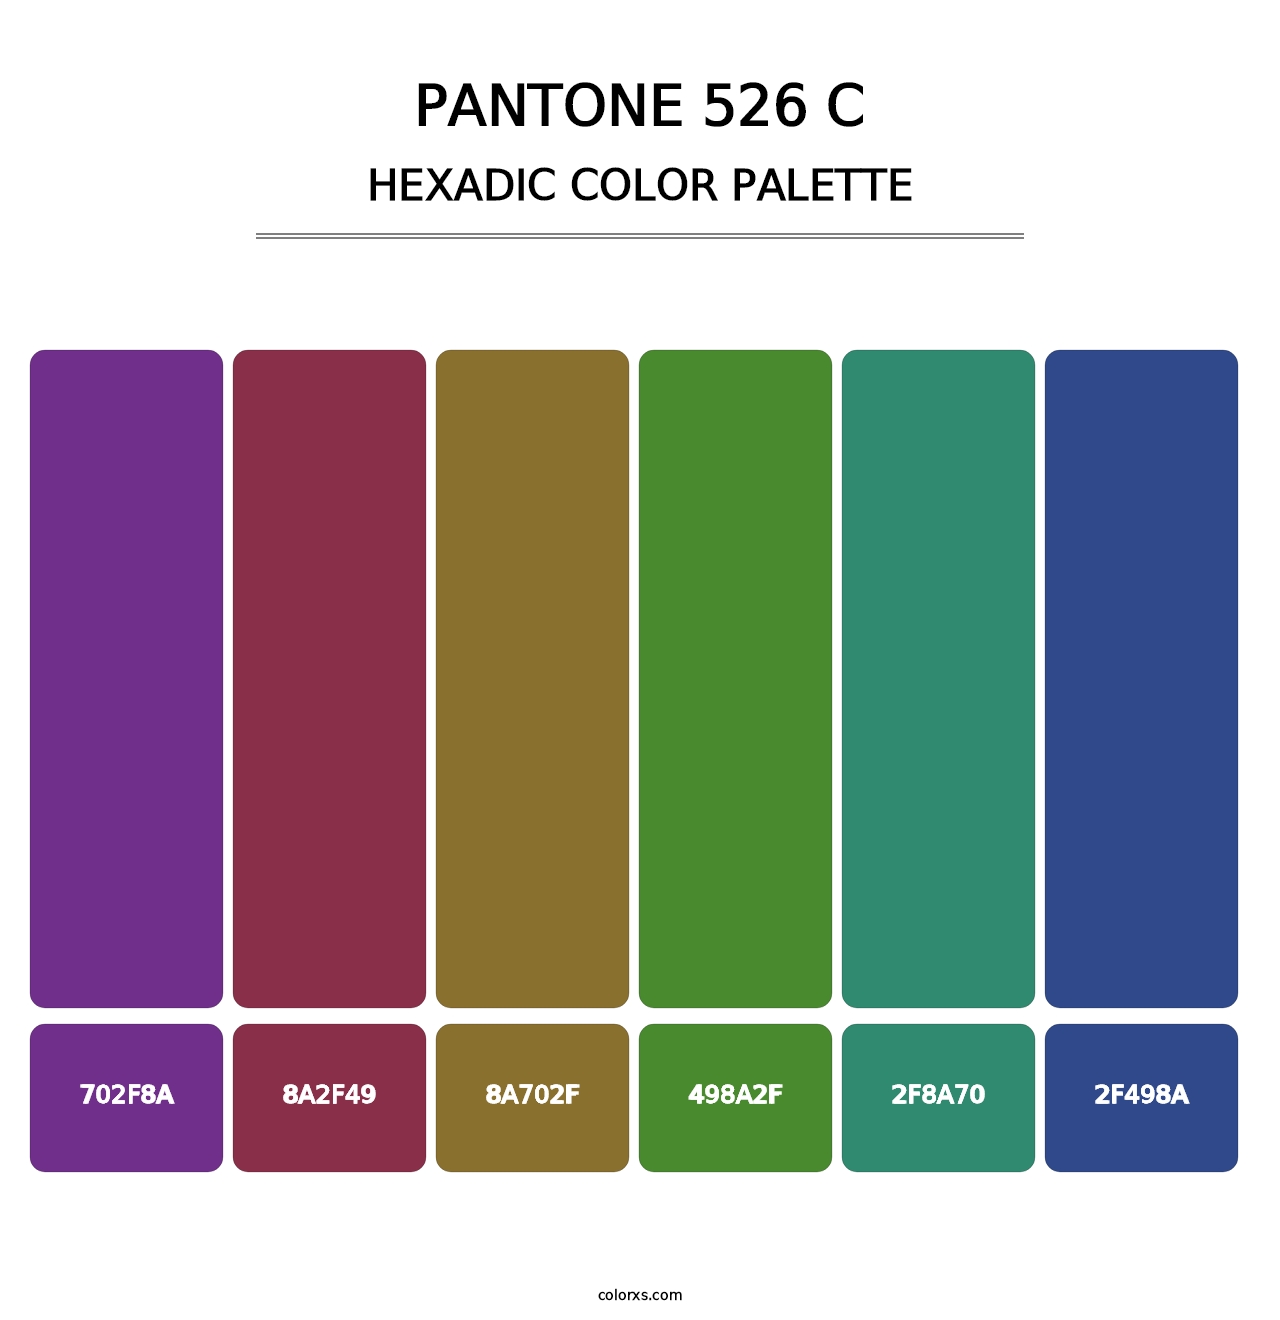 PANTONE 526 C - Hexadic Color Palette